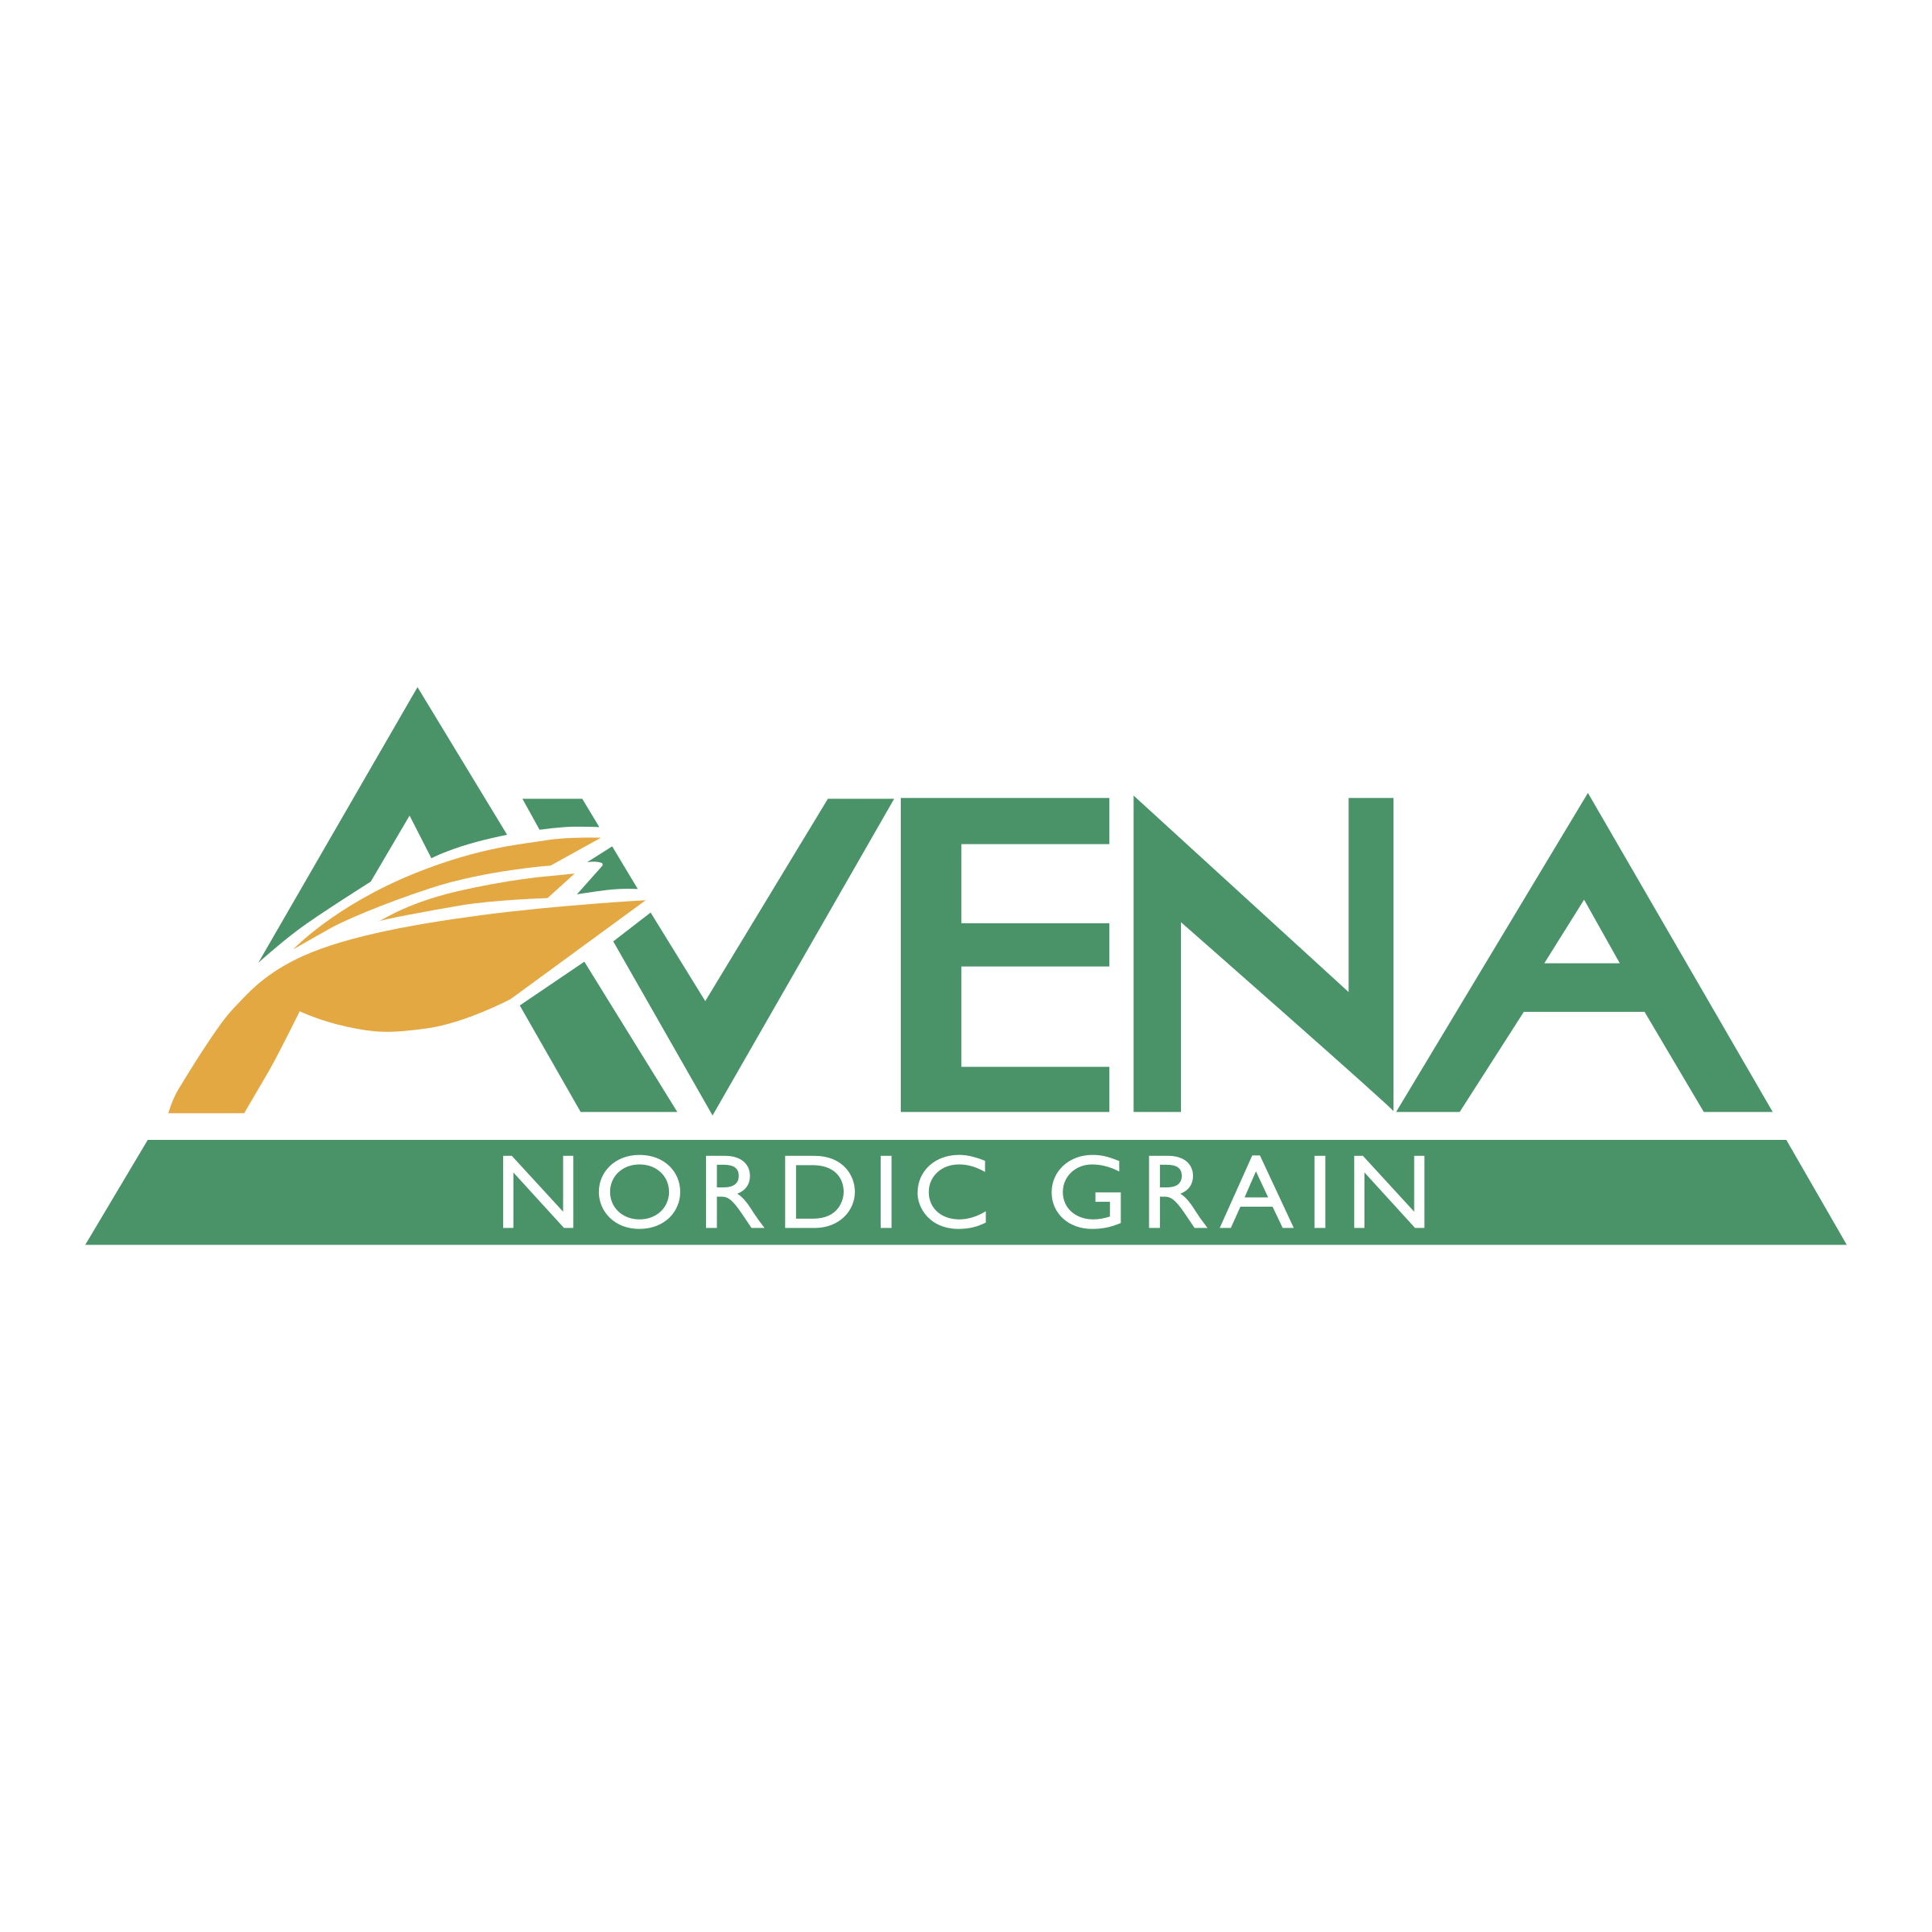 Grain Logo - Avena Nordic Grain Logo PNG Transparent & SVG Vector